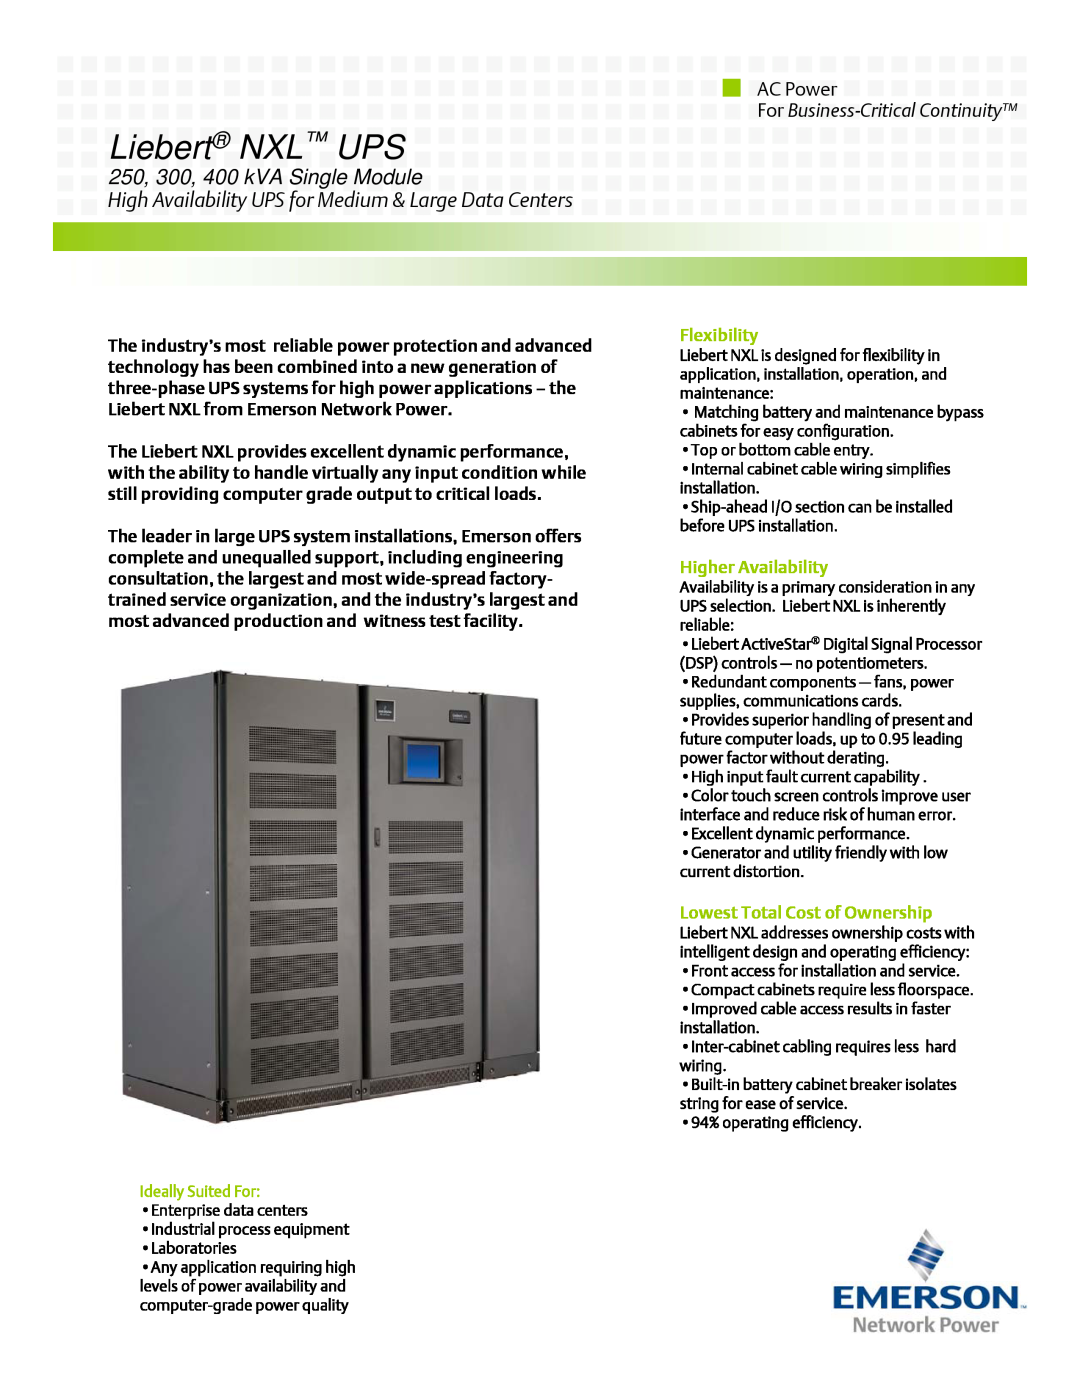 Emerson manual Liebert NXL UPS, 250, 300, 400 kVA Single Module, AC Power, For Business-CriticalContinuity, Flexibility 